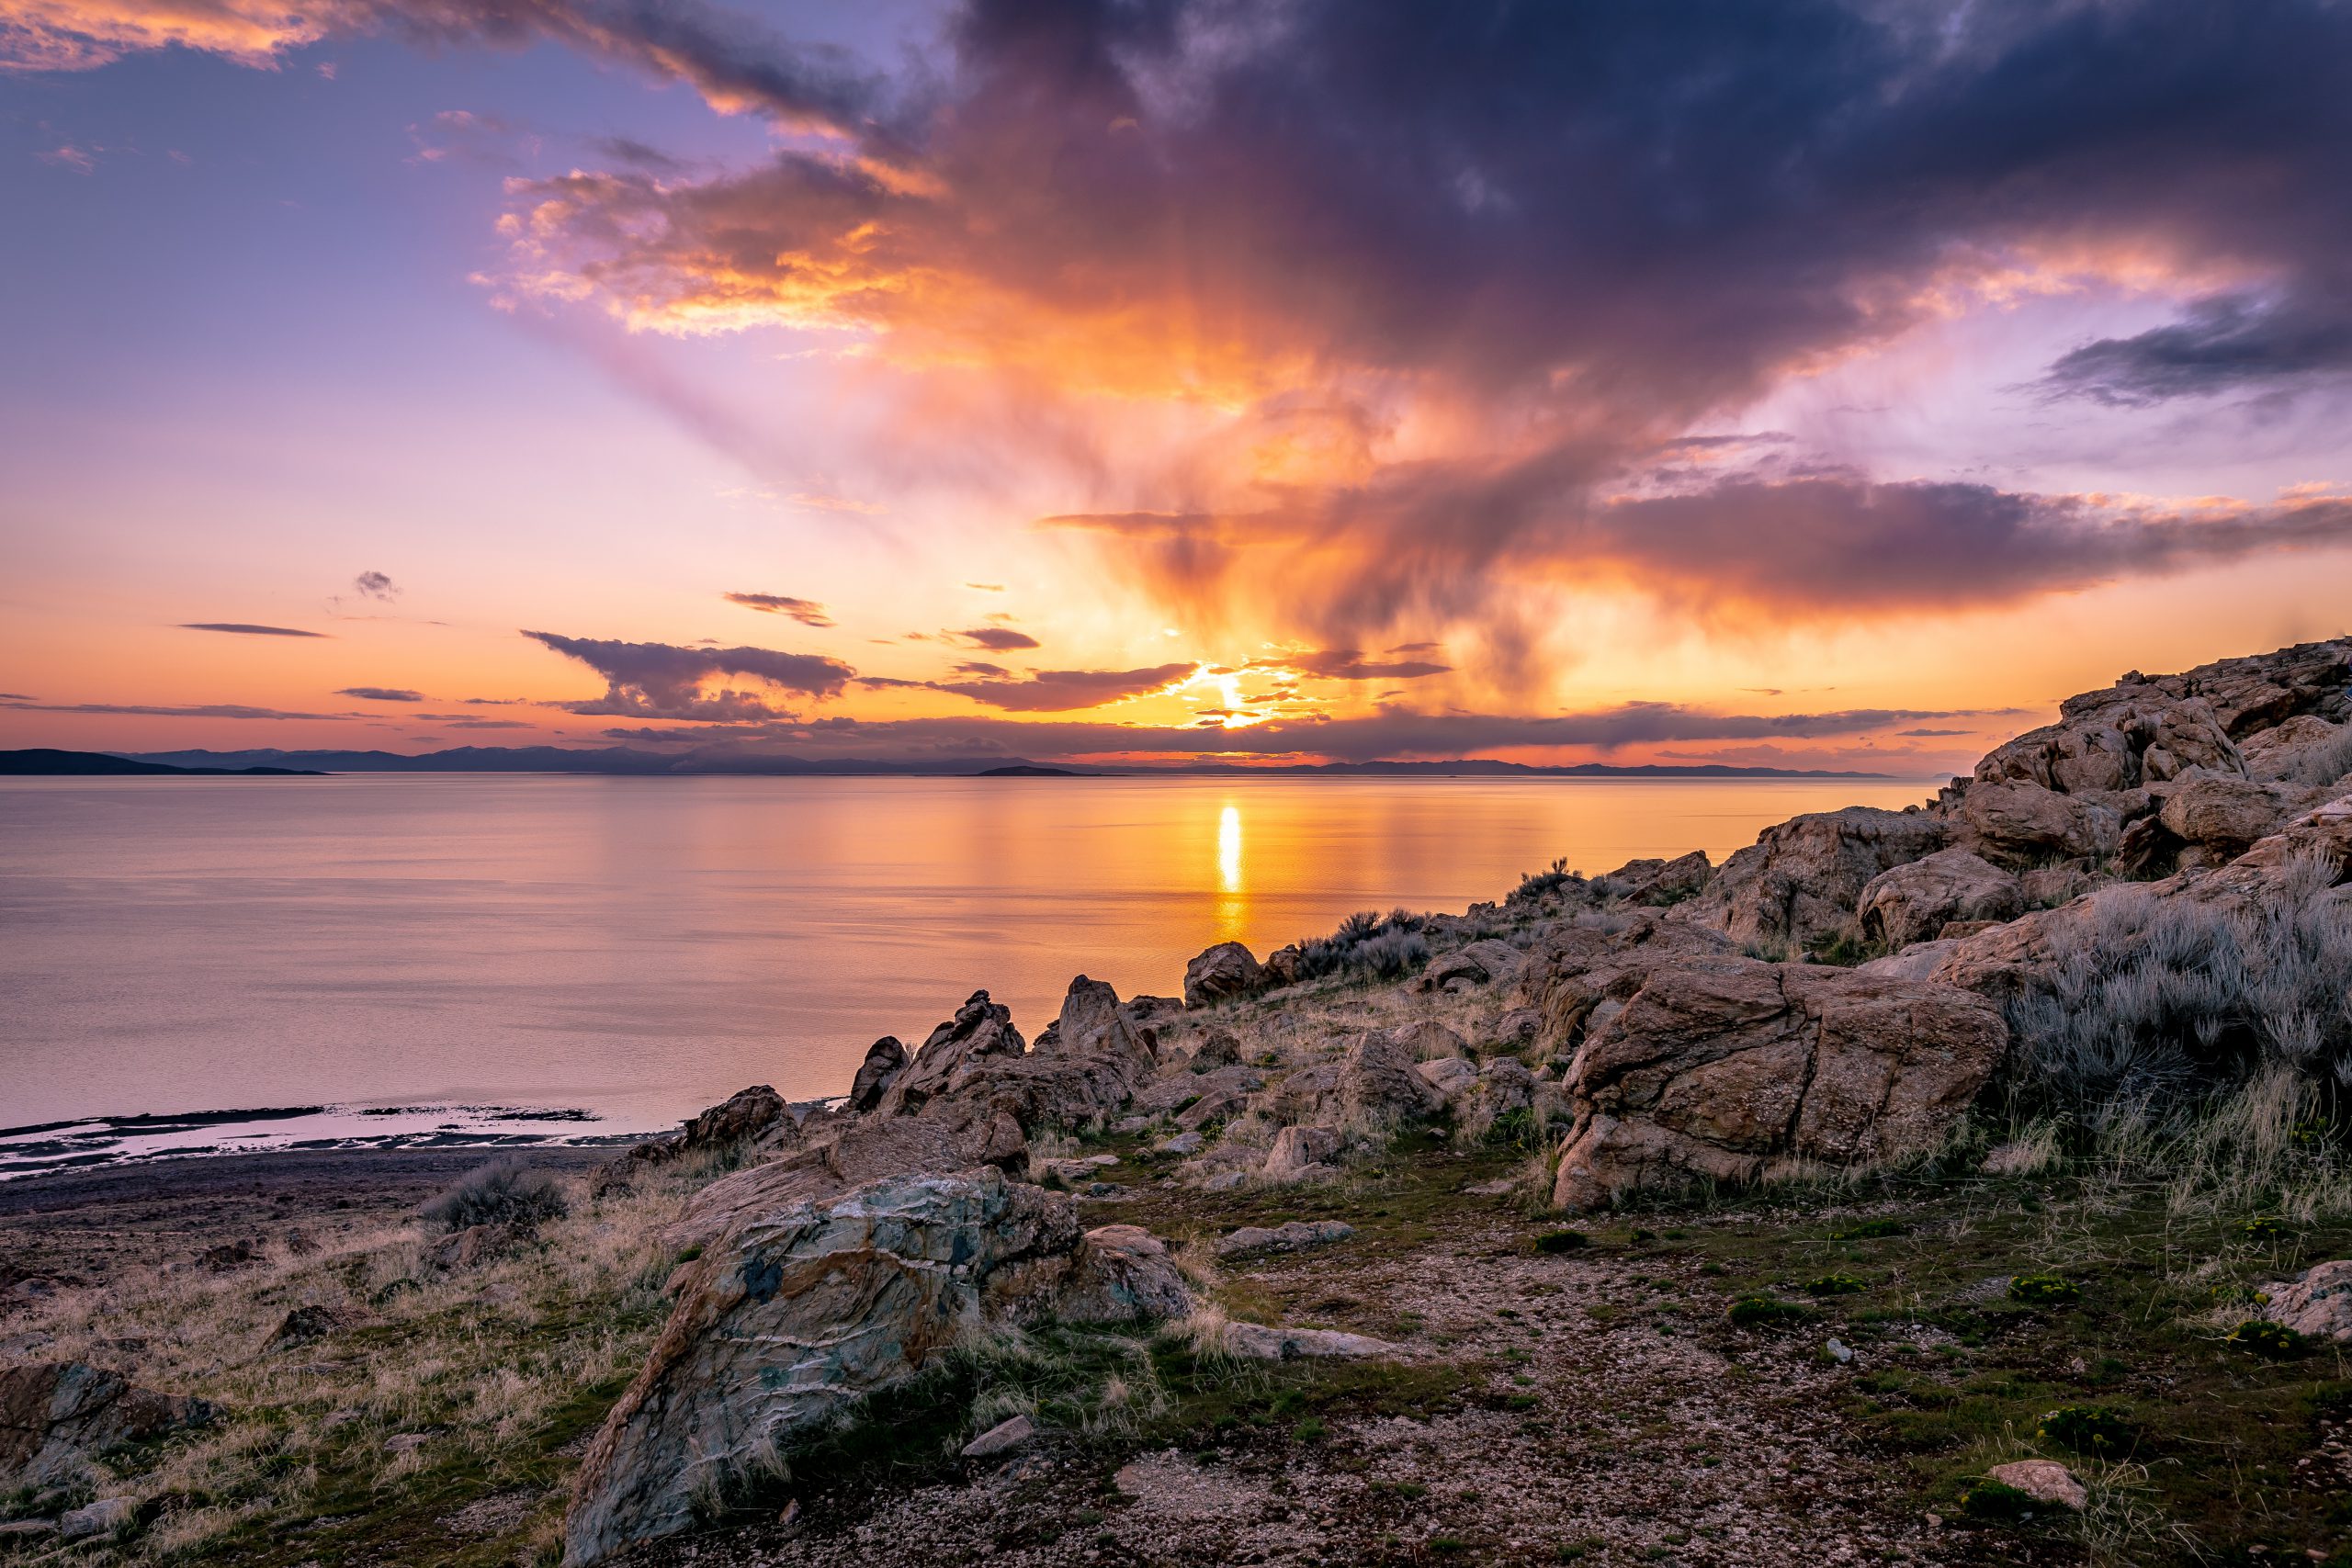 Image of rocks and lake during sunset